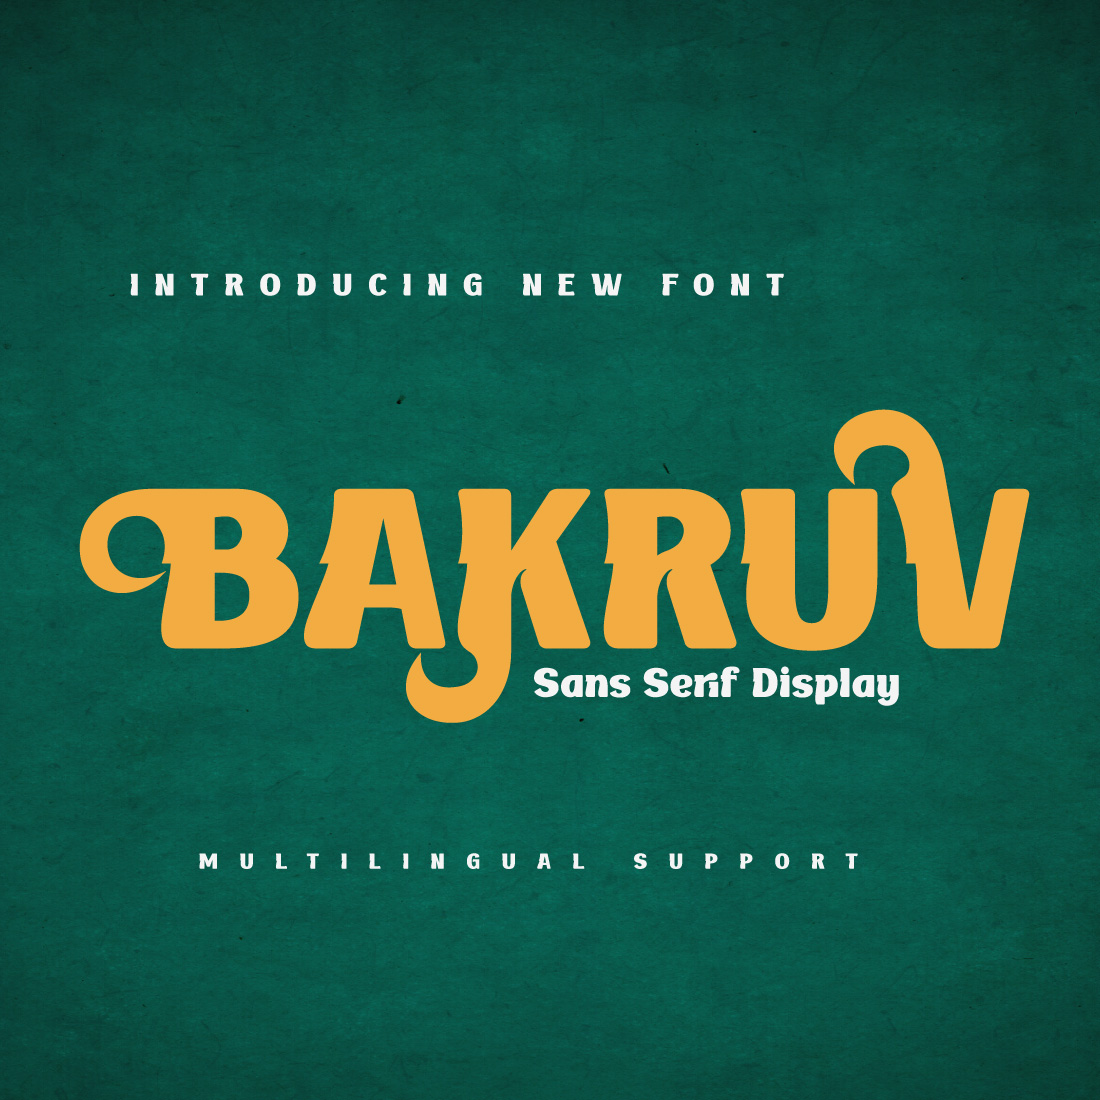 BAKRUV | Serif Classic Modernism cover image.